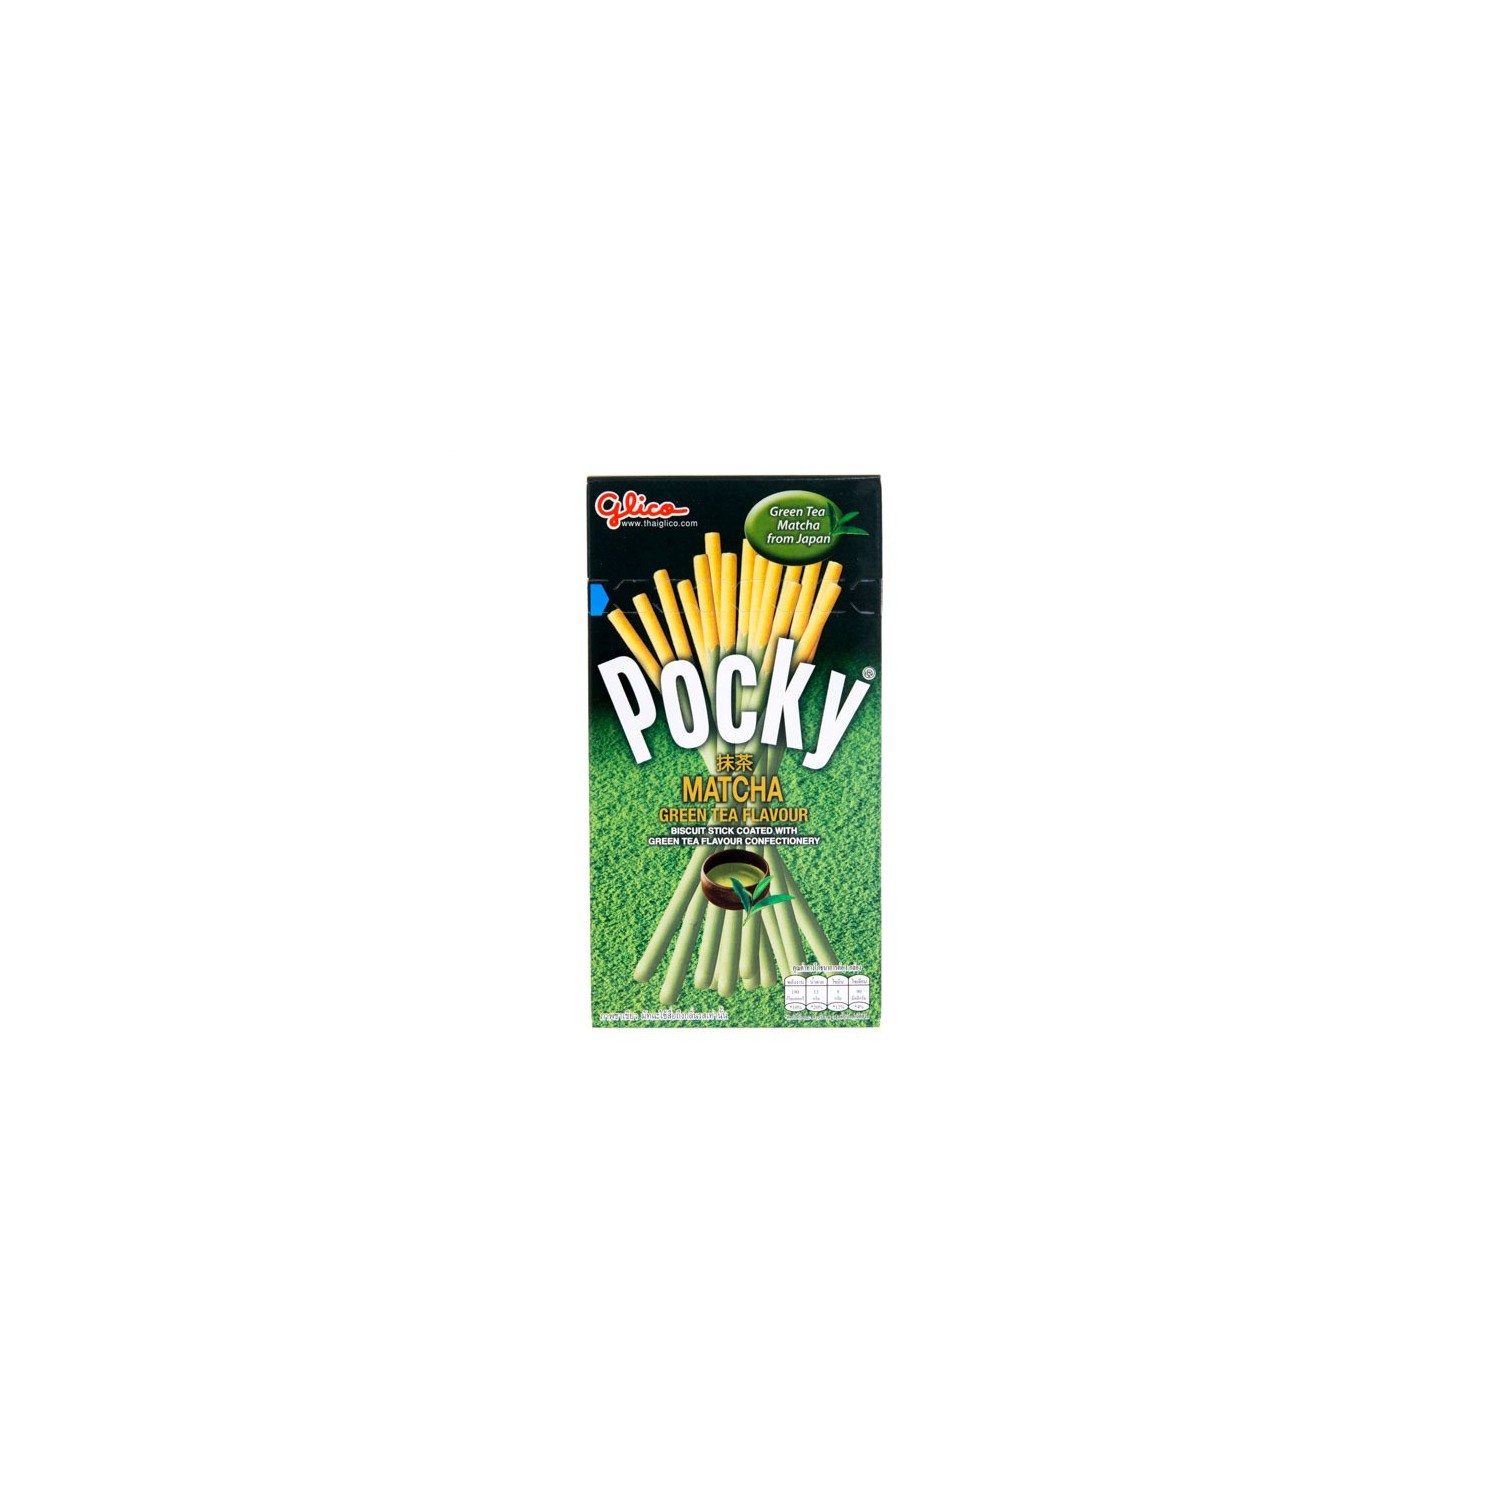 Glico snacks - Pocky Matcha Green Tea Flavour snack - 10pck